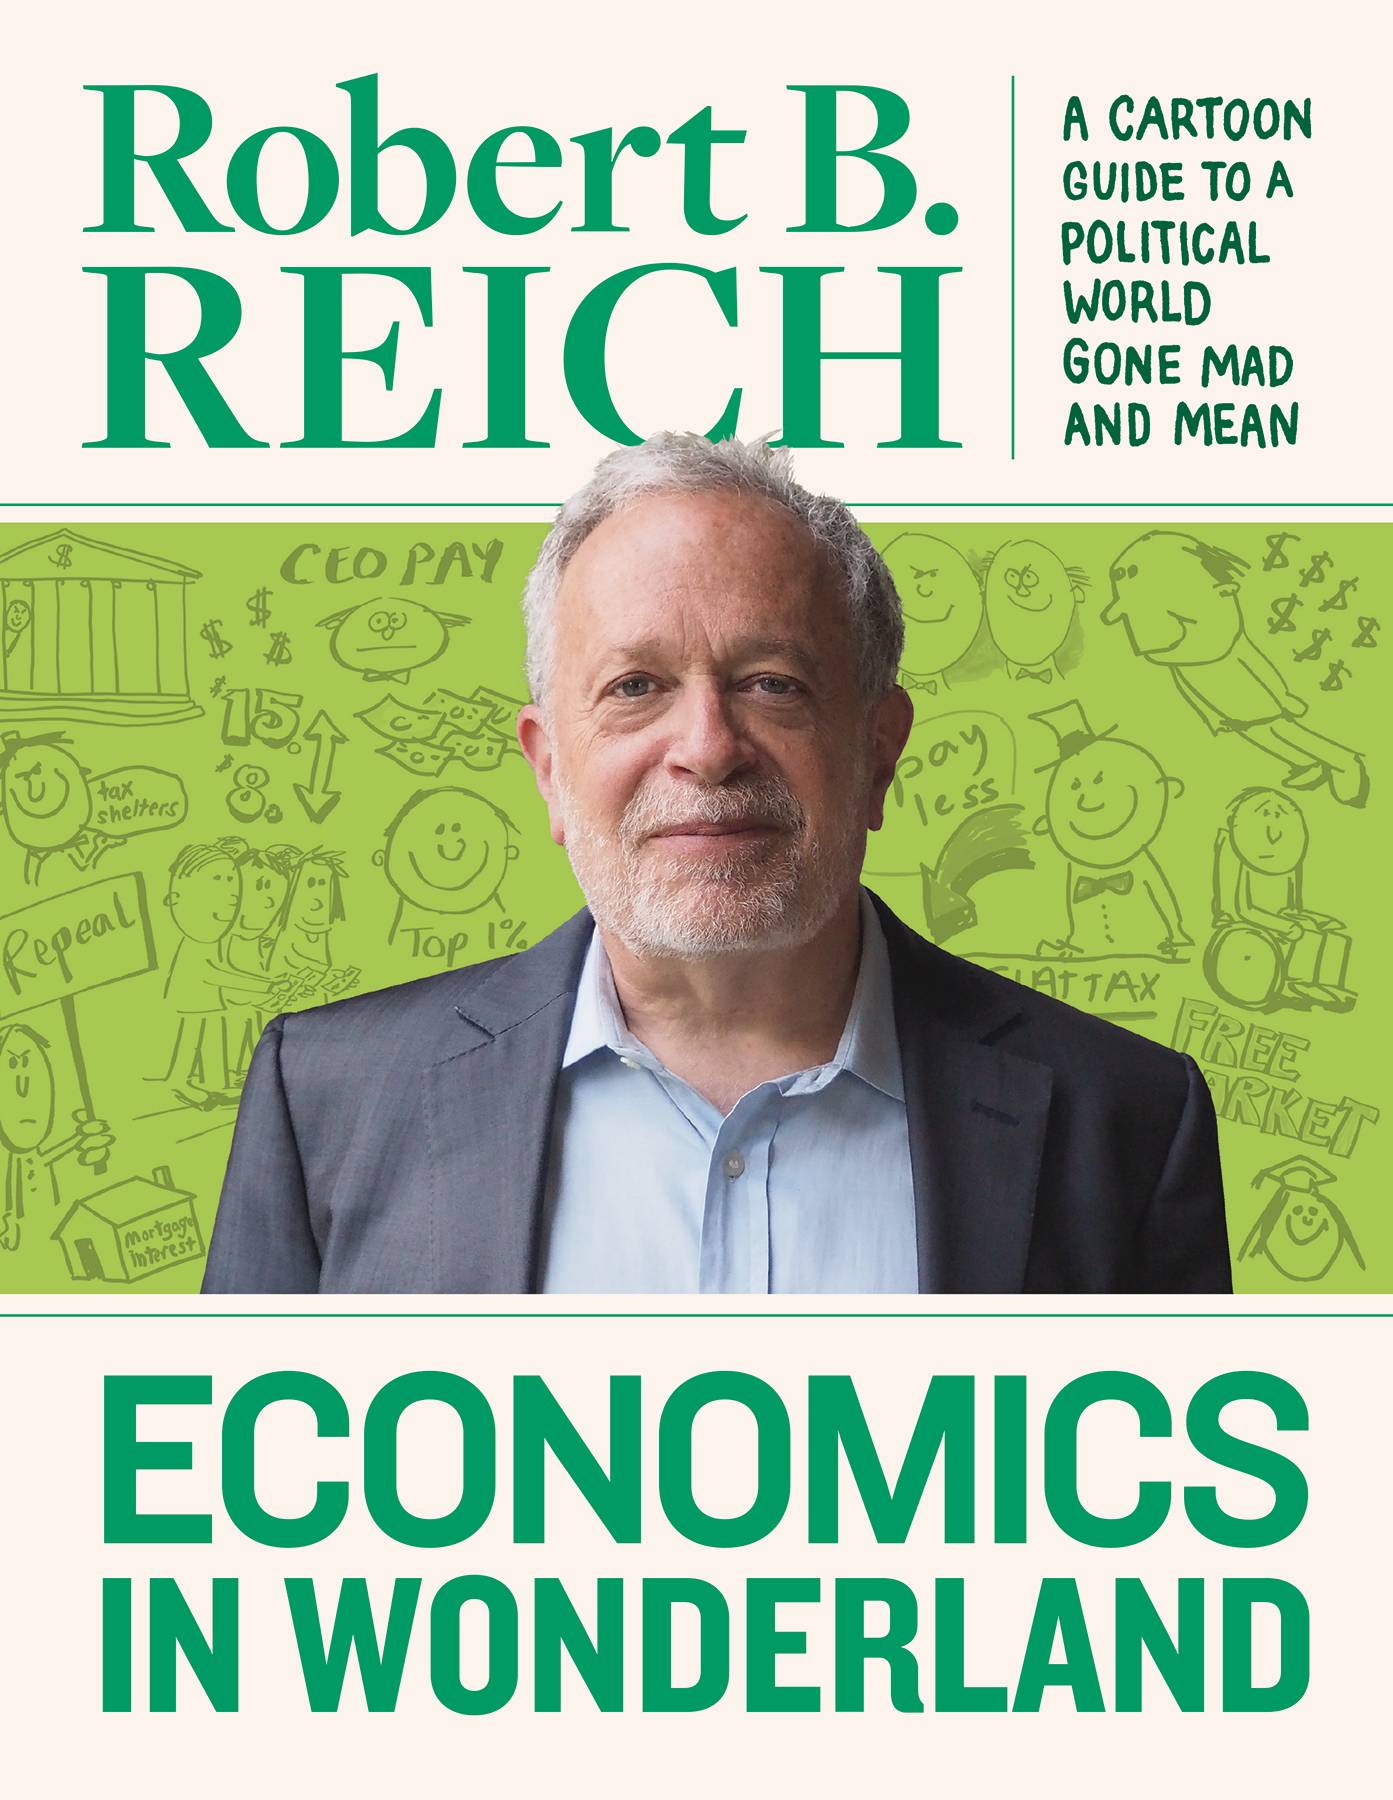 ECONOMICS WONDERLAND HC ROBERT REICH CARTOON POLITICAL